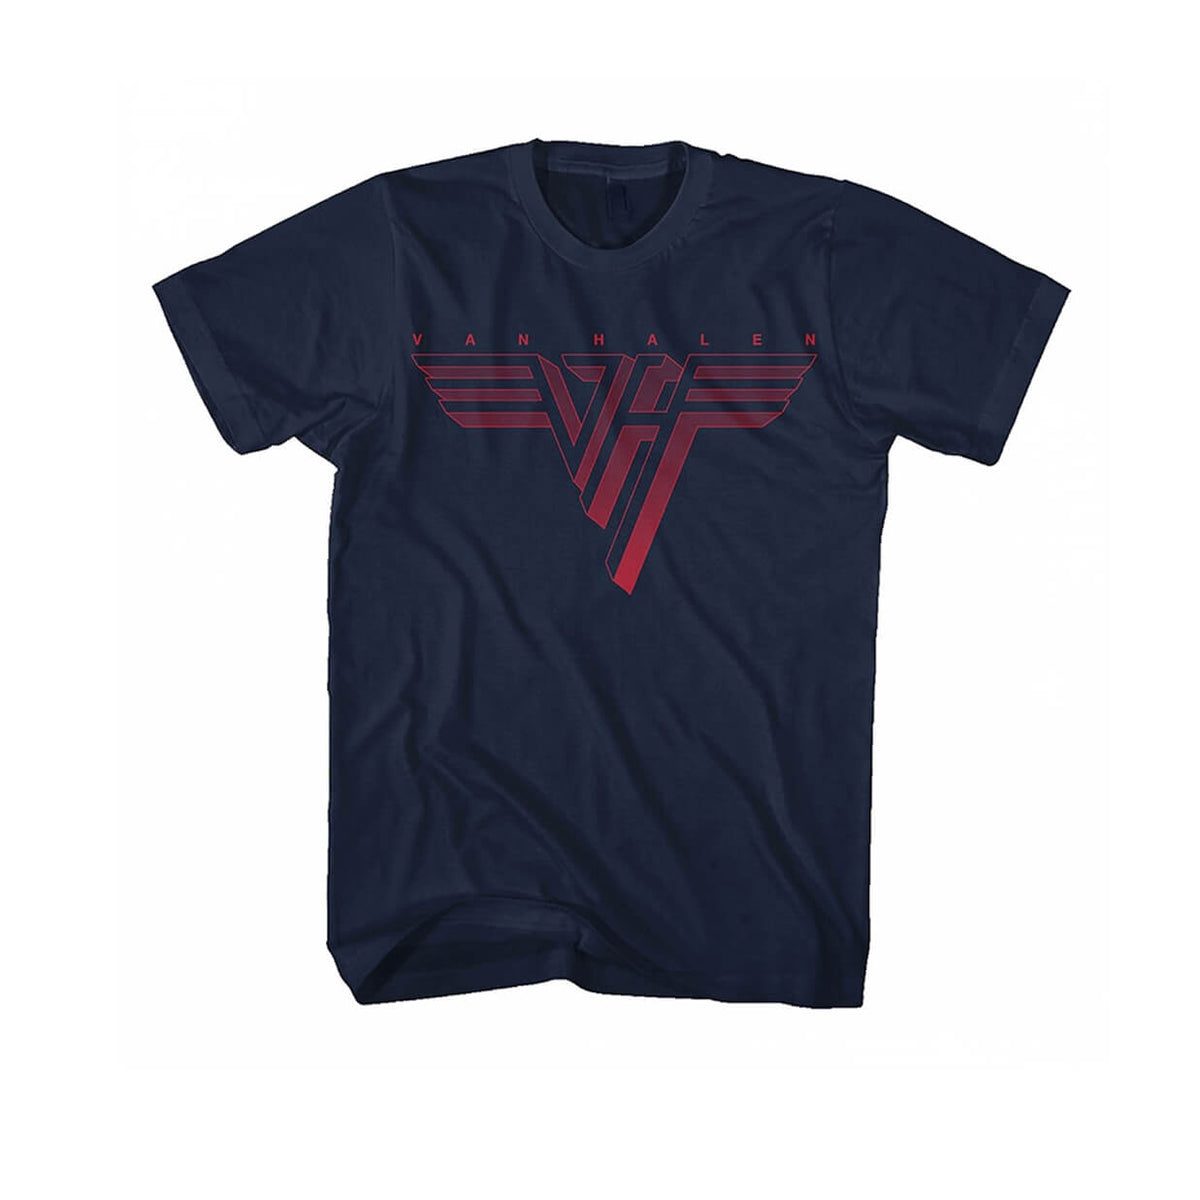 Vinyl - Van Halen : Classic Red Logo - T-Shirt - The Record Hub